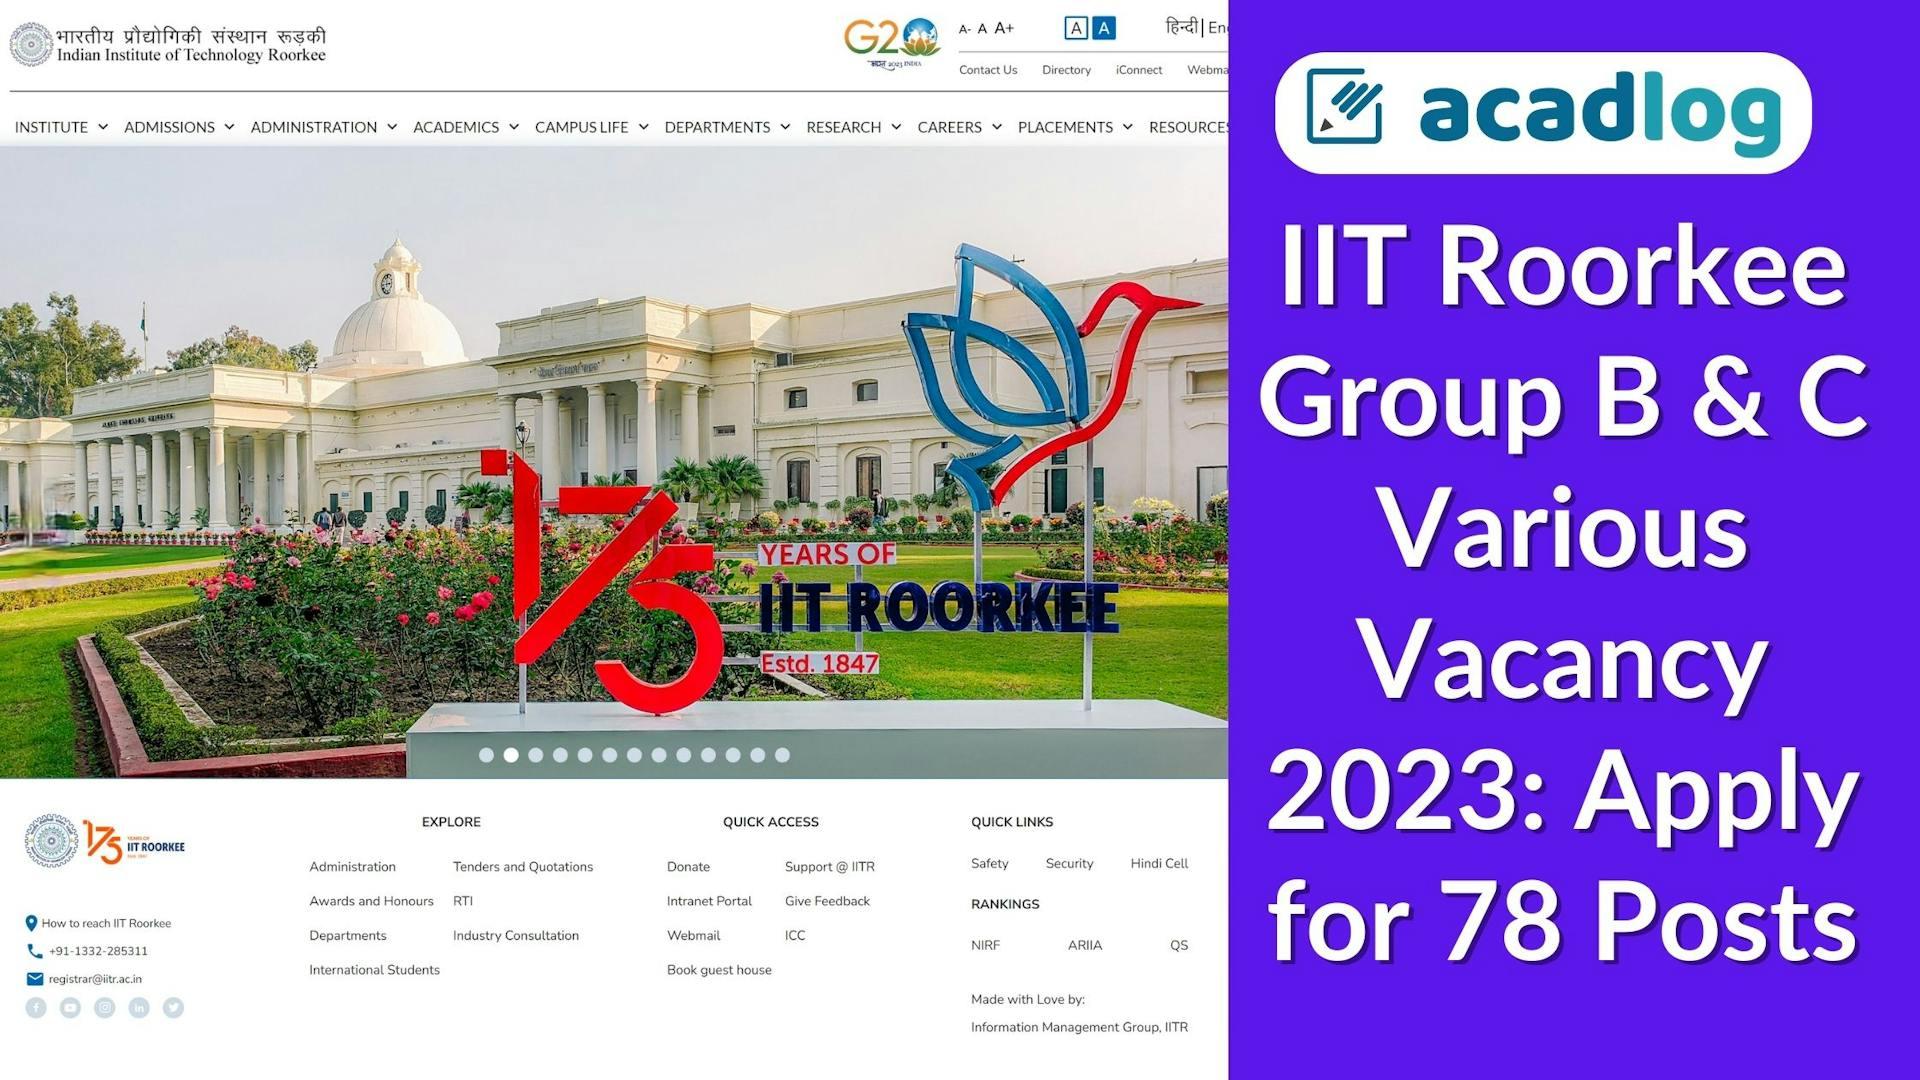 IIT Roorkee Group B & C Various Vacancy 2023: Apply for 78 Posts